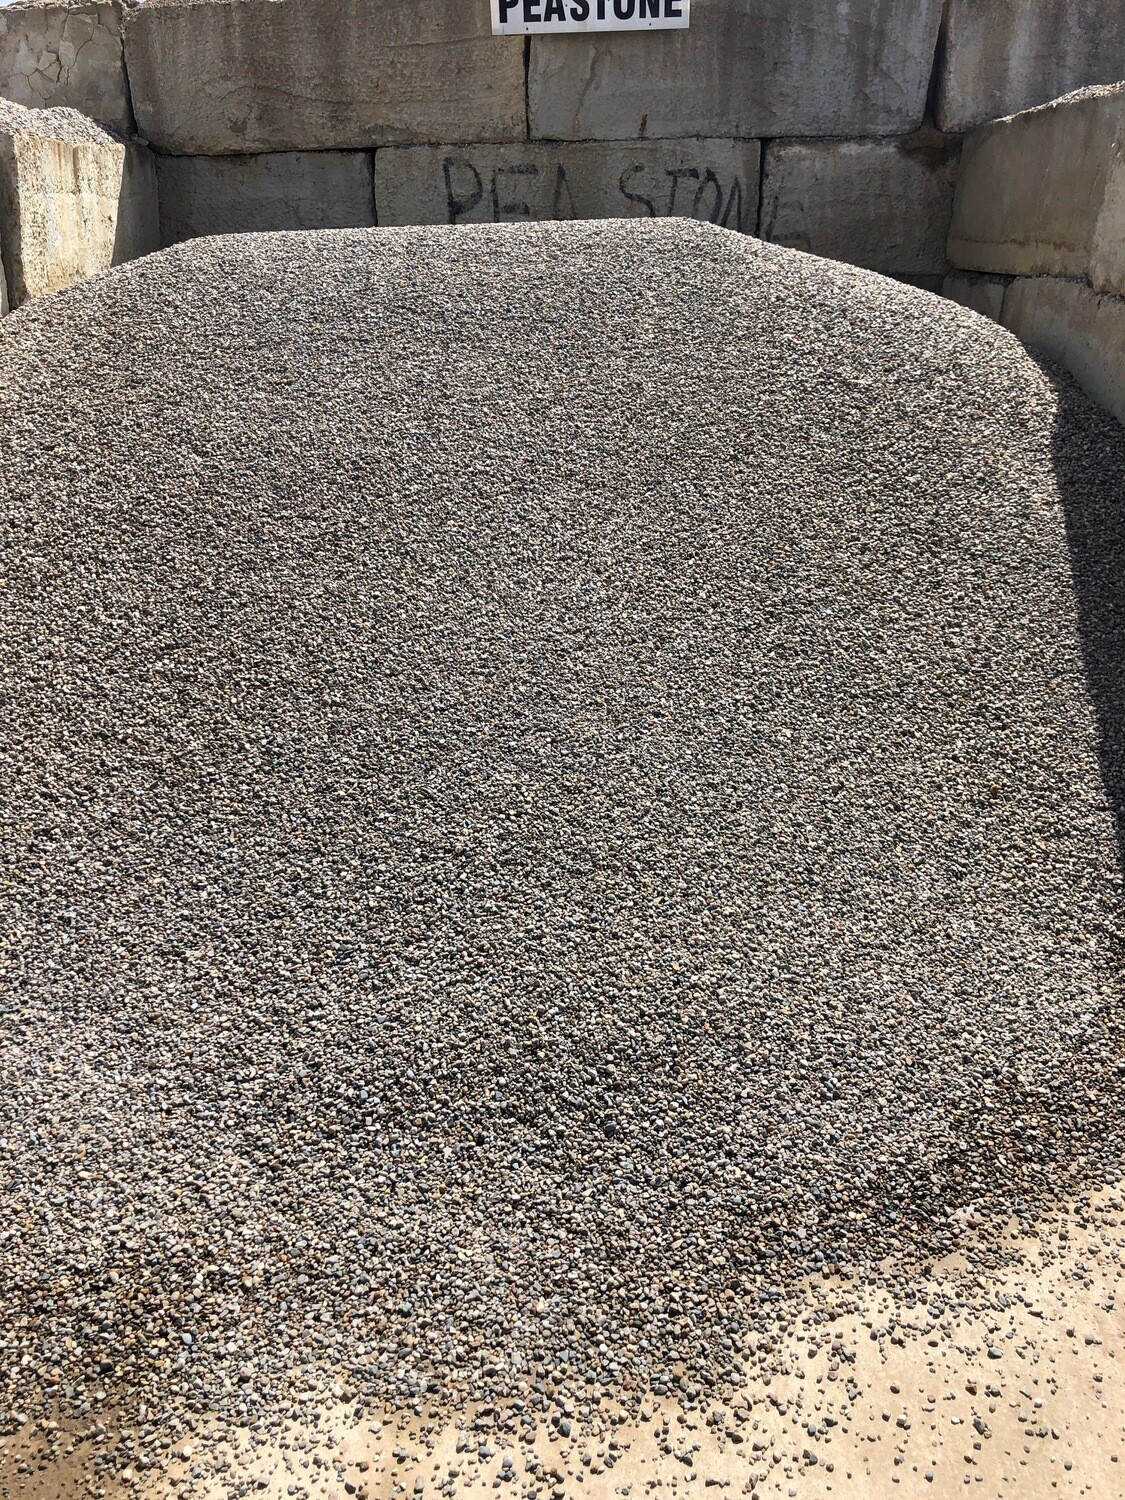 Pea Stone (per yard)